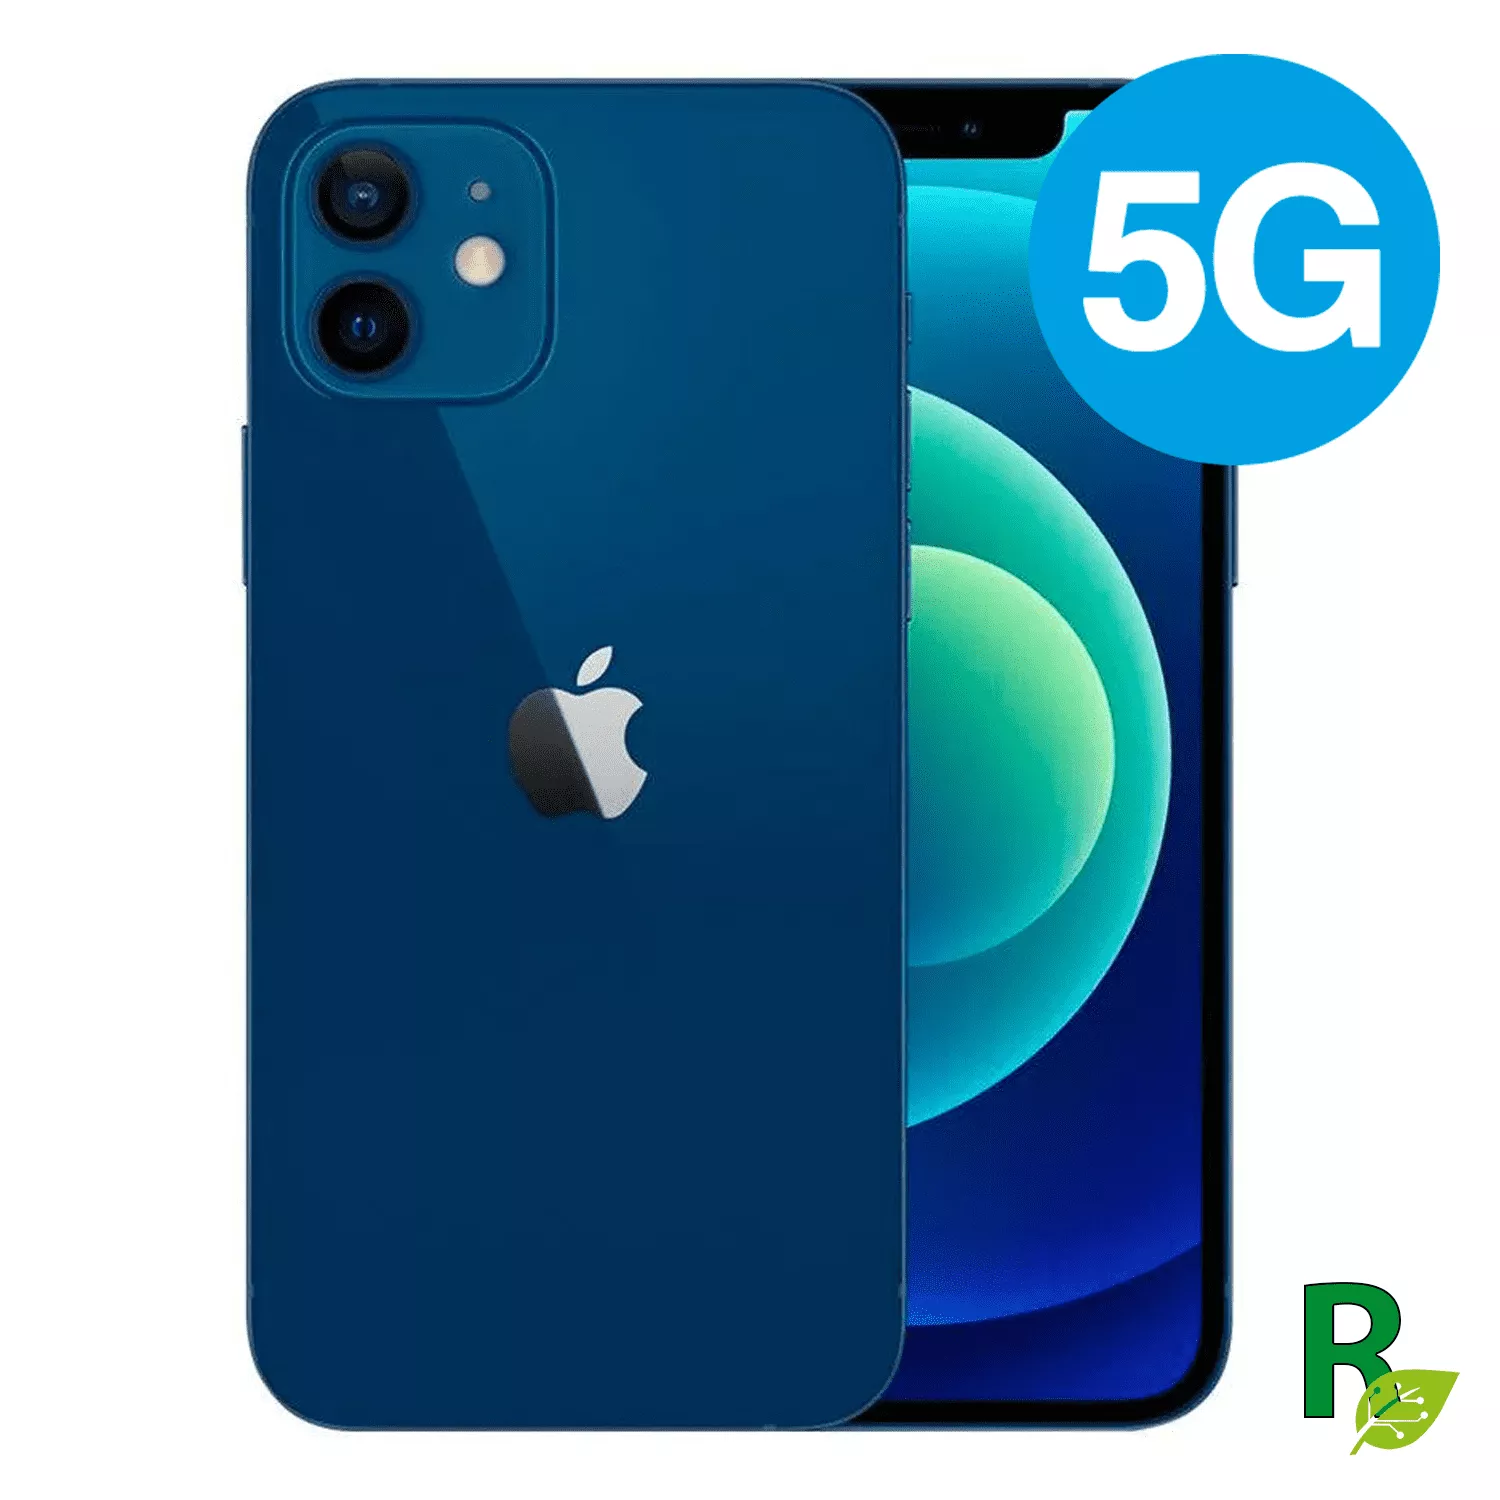 iPhone 12 Mini 64GB - Blue - 12MINIBLUE64AB - Grado AB 12M64IPH5-Reacondicionado + Estuche Porta Celular brazo   pn 12MINIBLUE64ABest